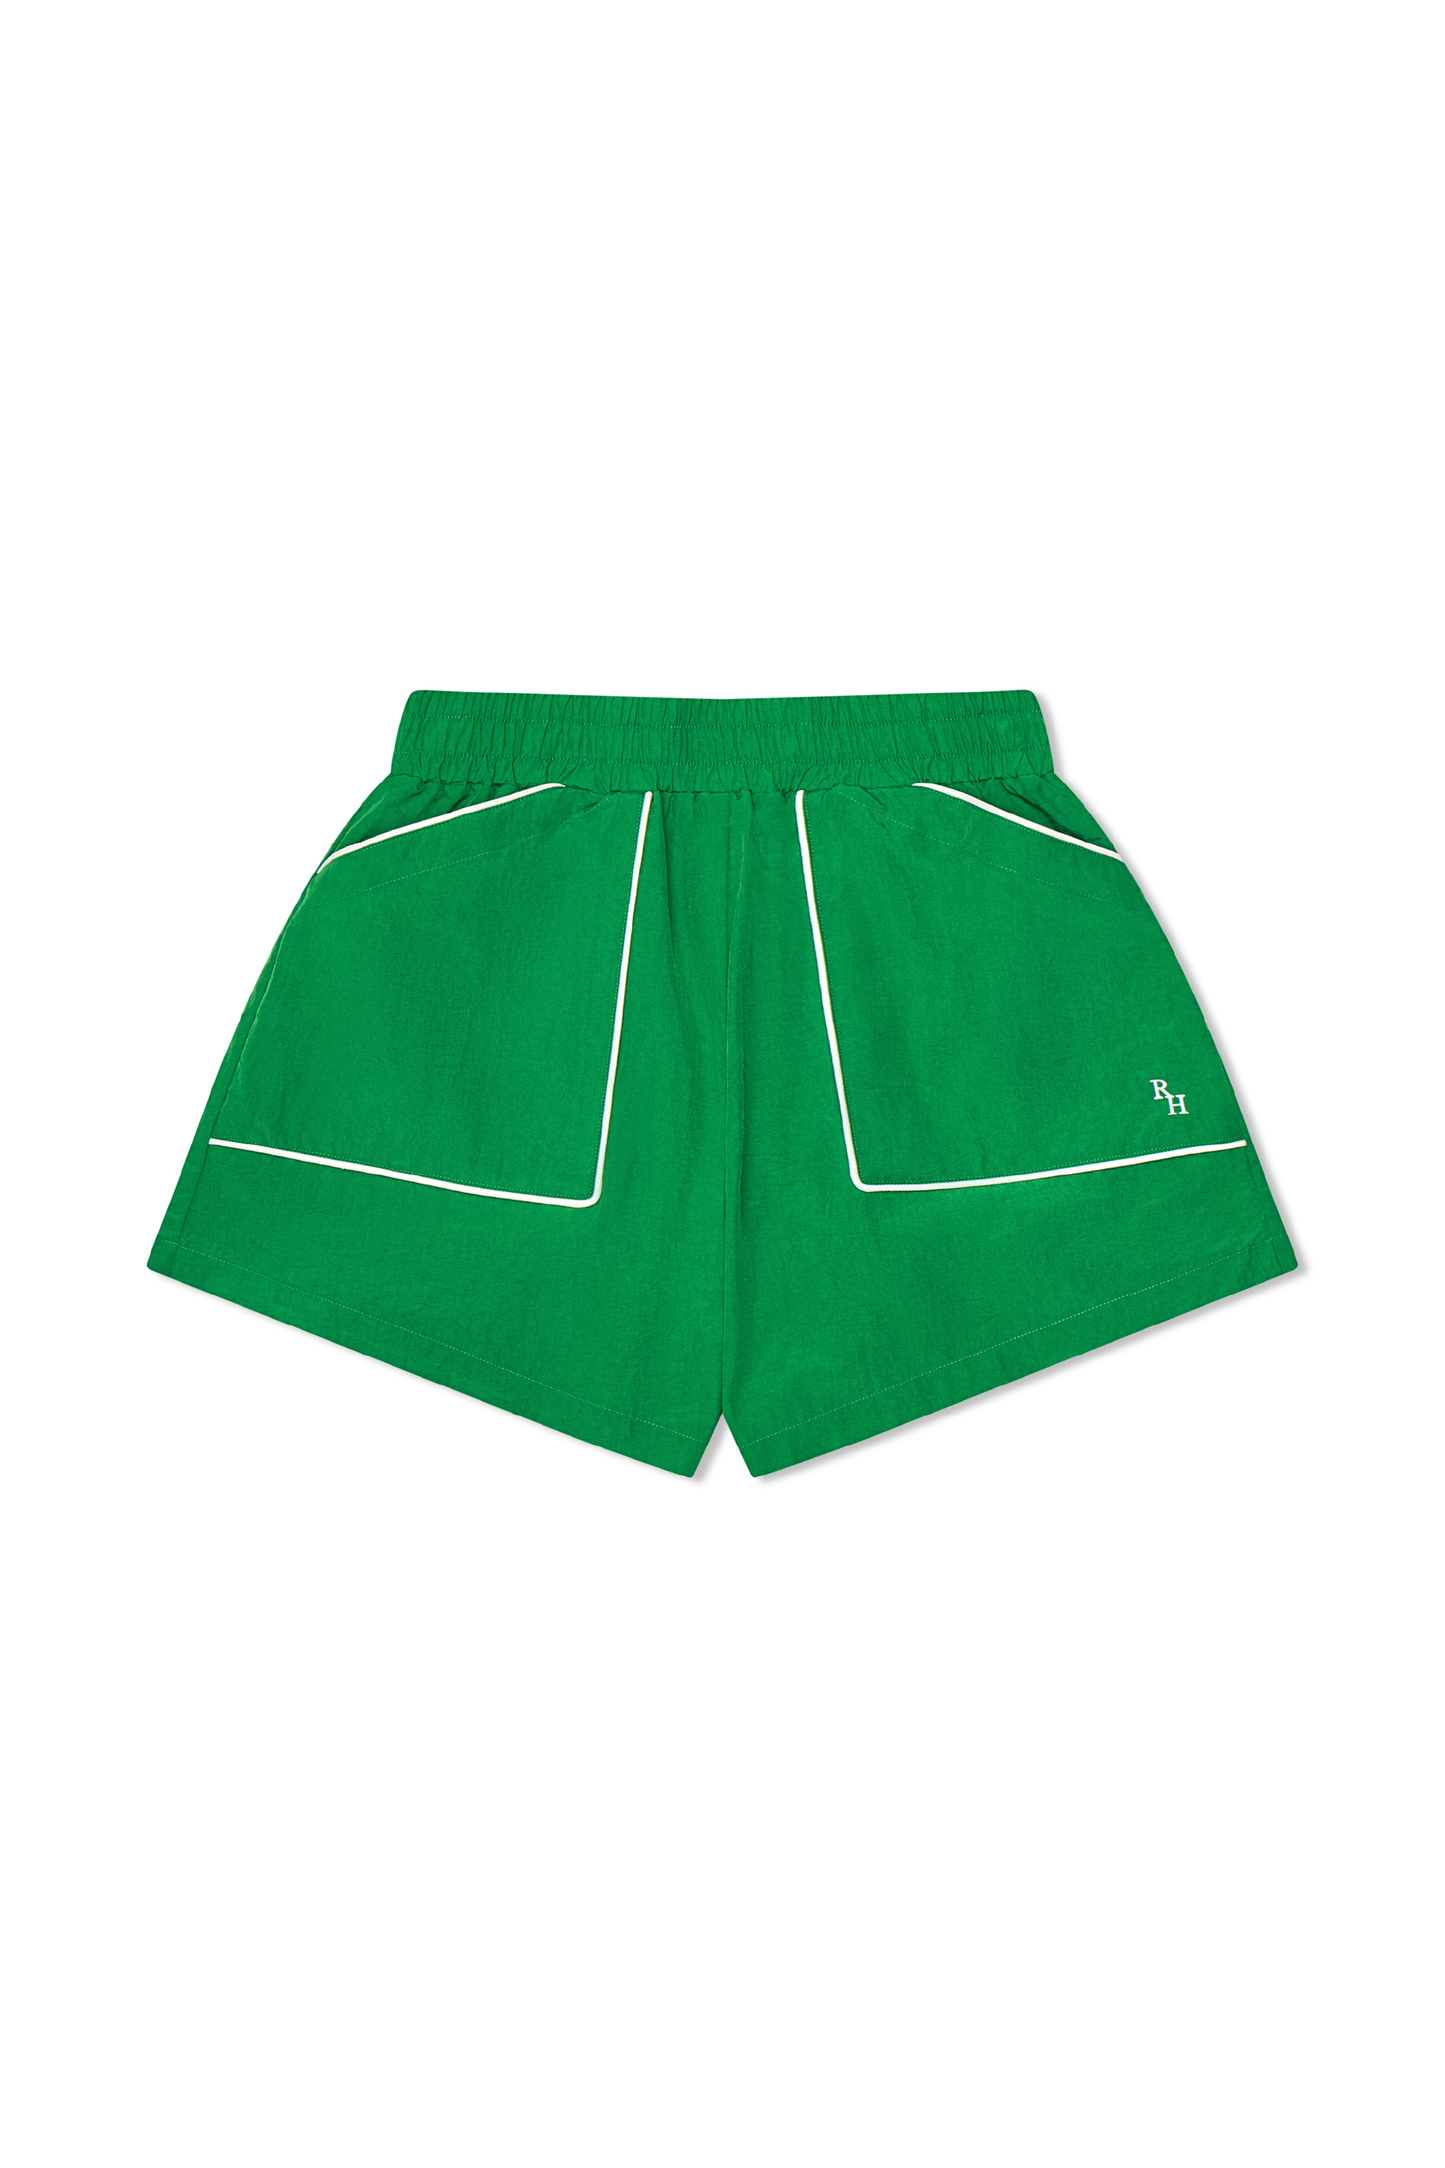 Princeton Nylon Patch Pocket Short in Green